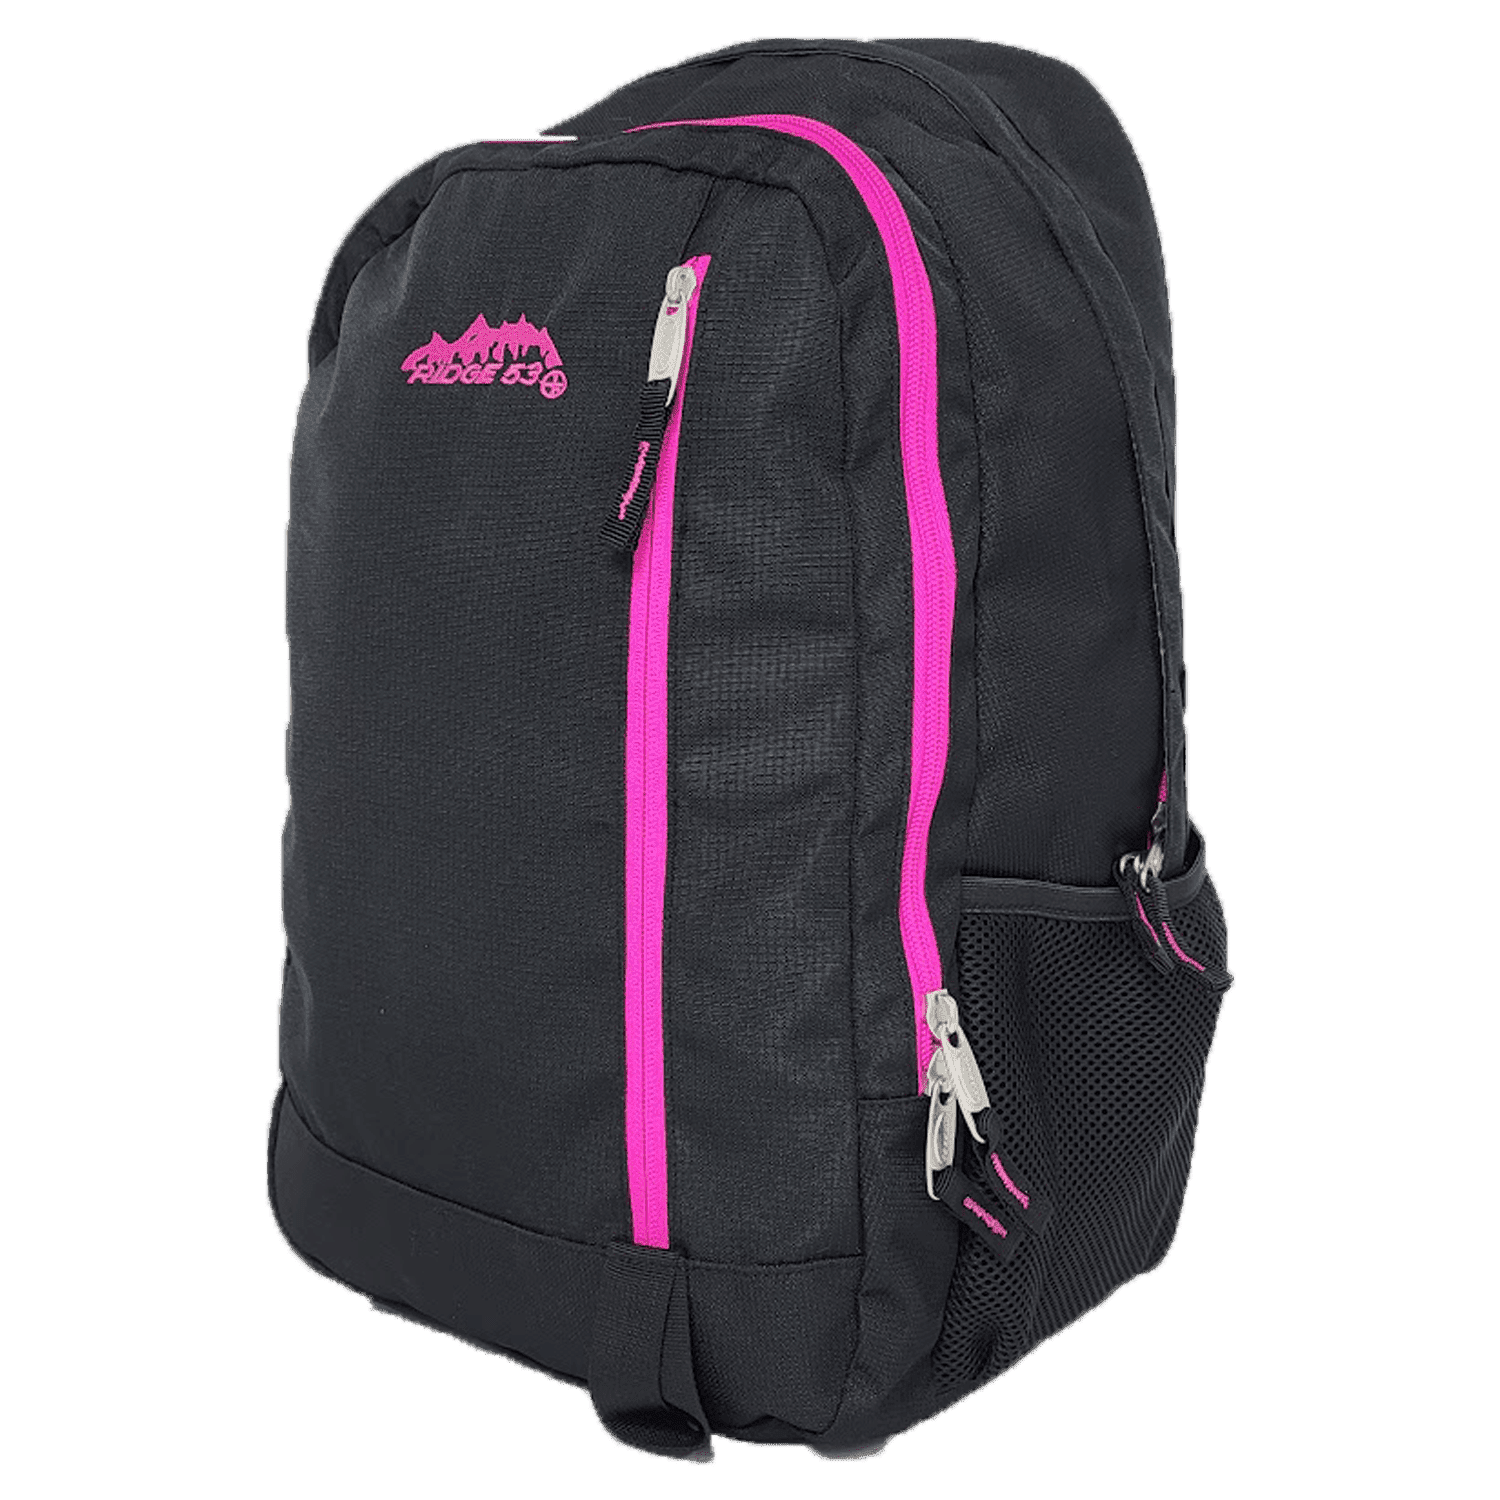 Sportech Ridge 53 – Dawson Backpack - Black/Pink 1 Shaws Department Stores